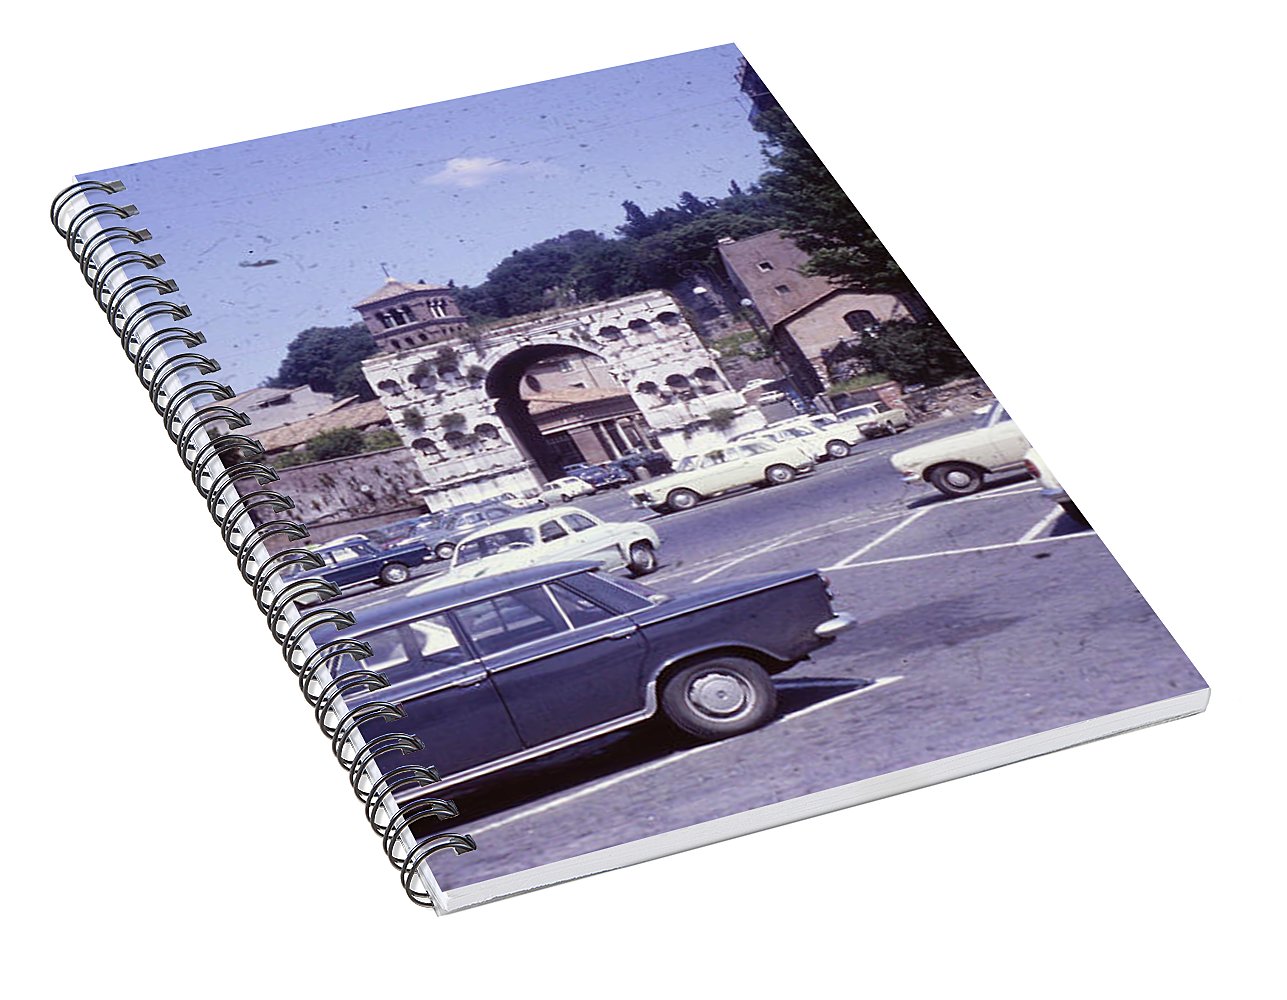 Europe Trip 1970 Number 1 - Spiral Notebook